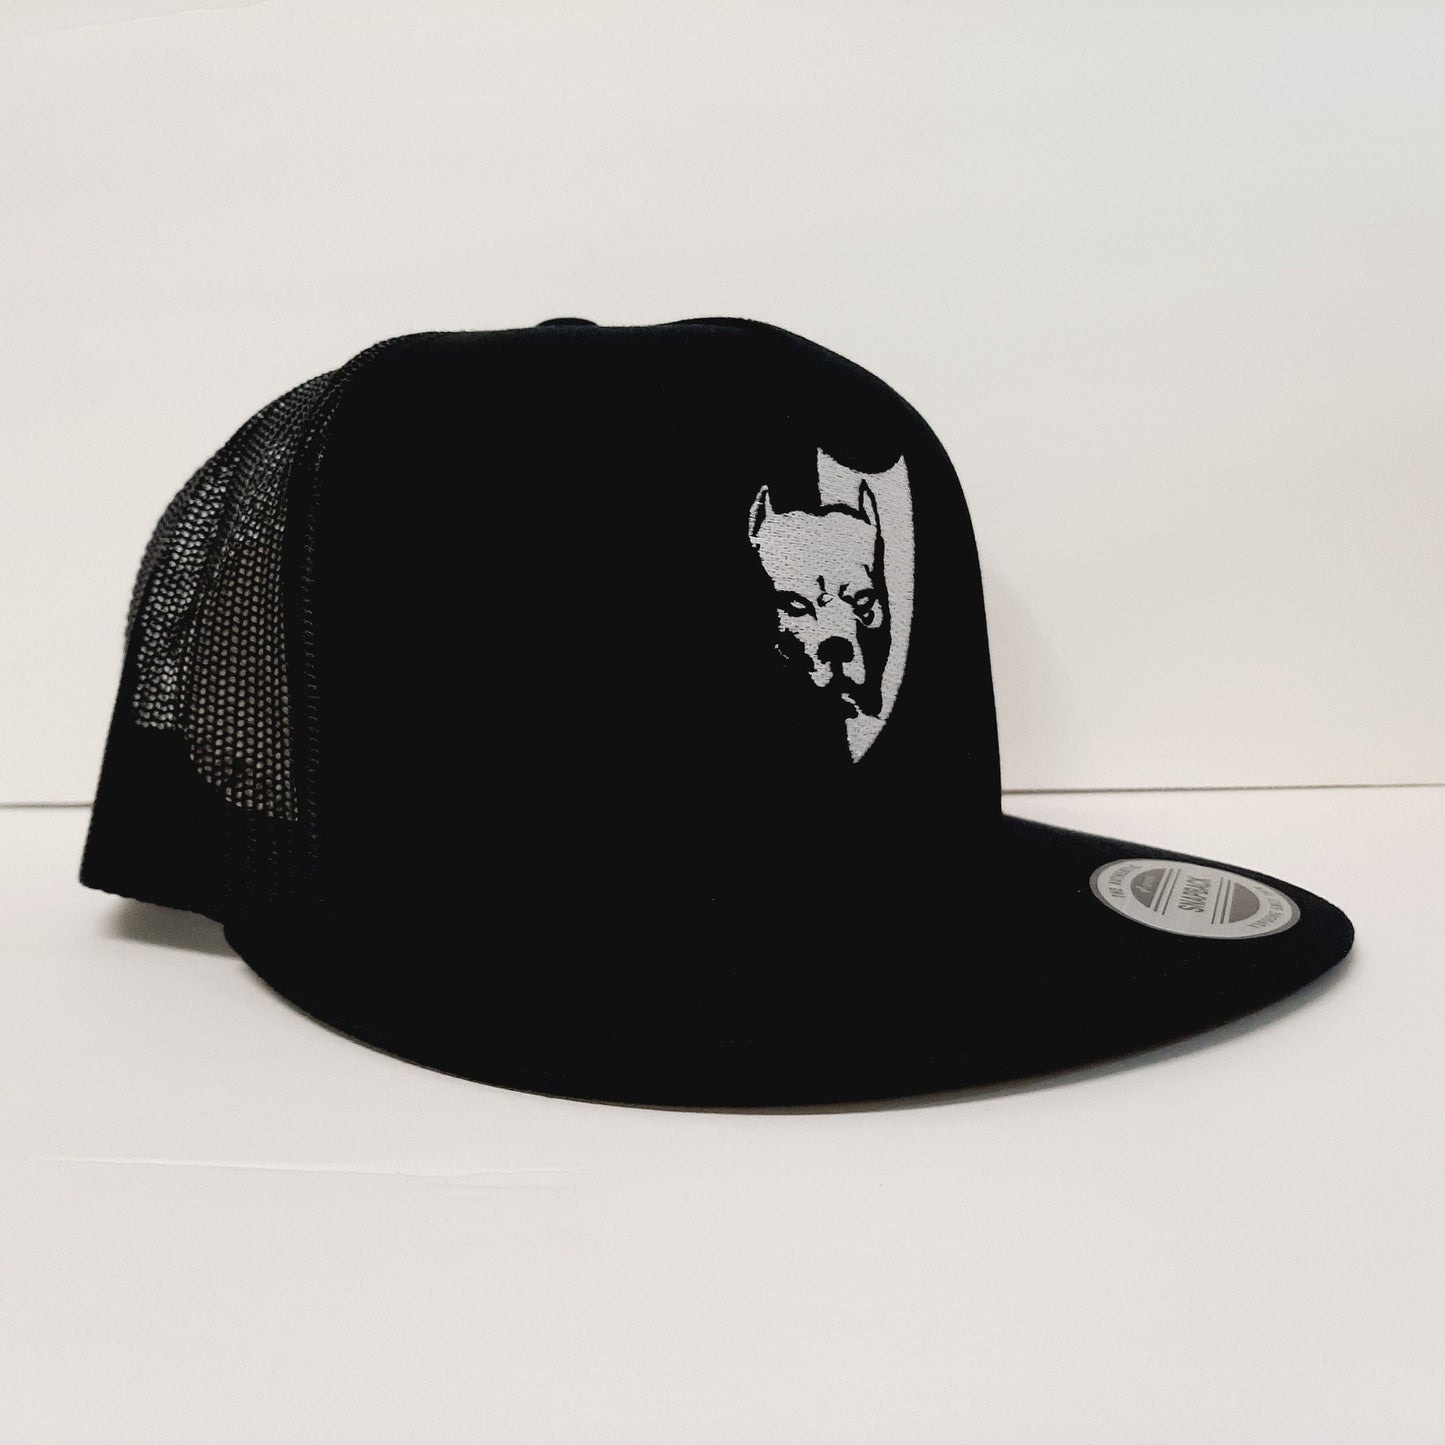 Pitbull Dog Shield Yupoong Flat Bill Mesh Snapback Cap Hat Black Embroidered